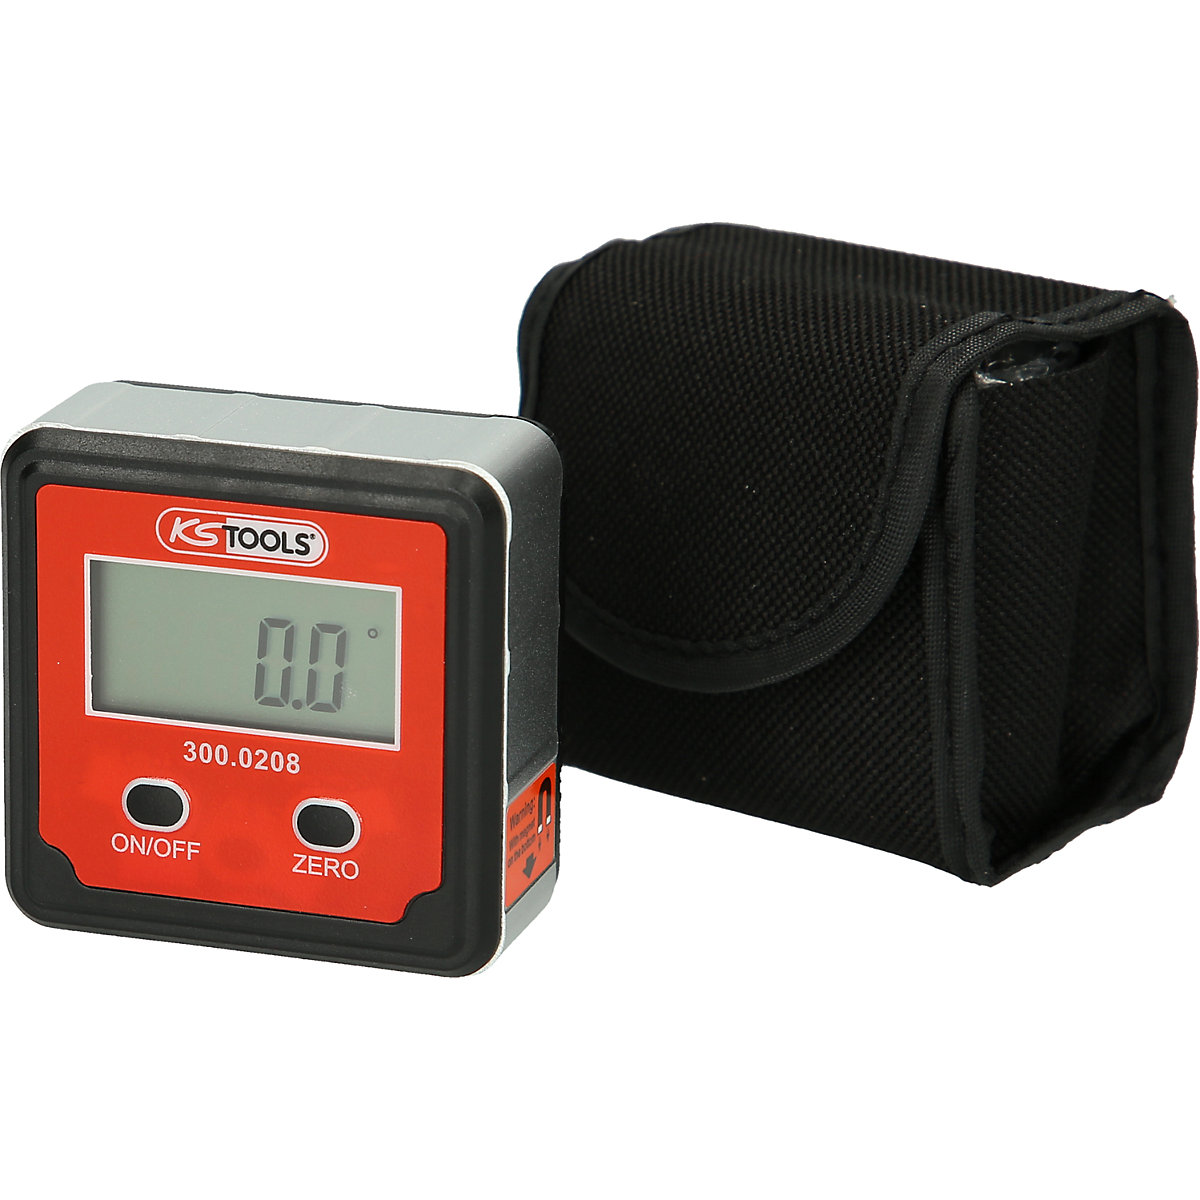 Digitalni naklonometer - KS Tools